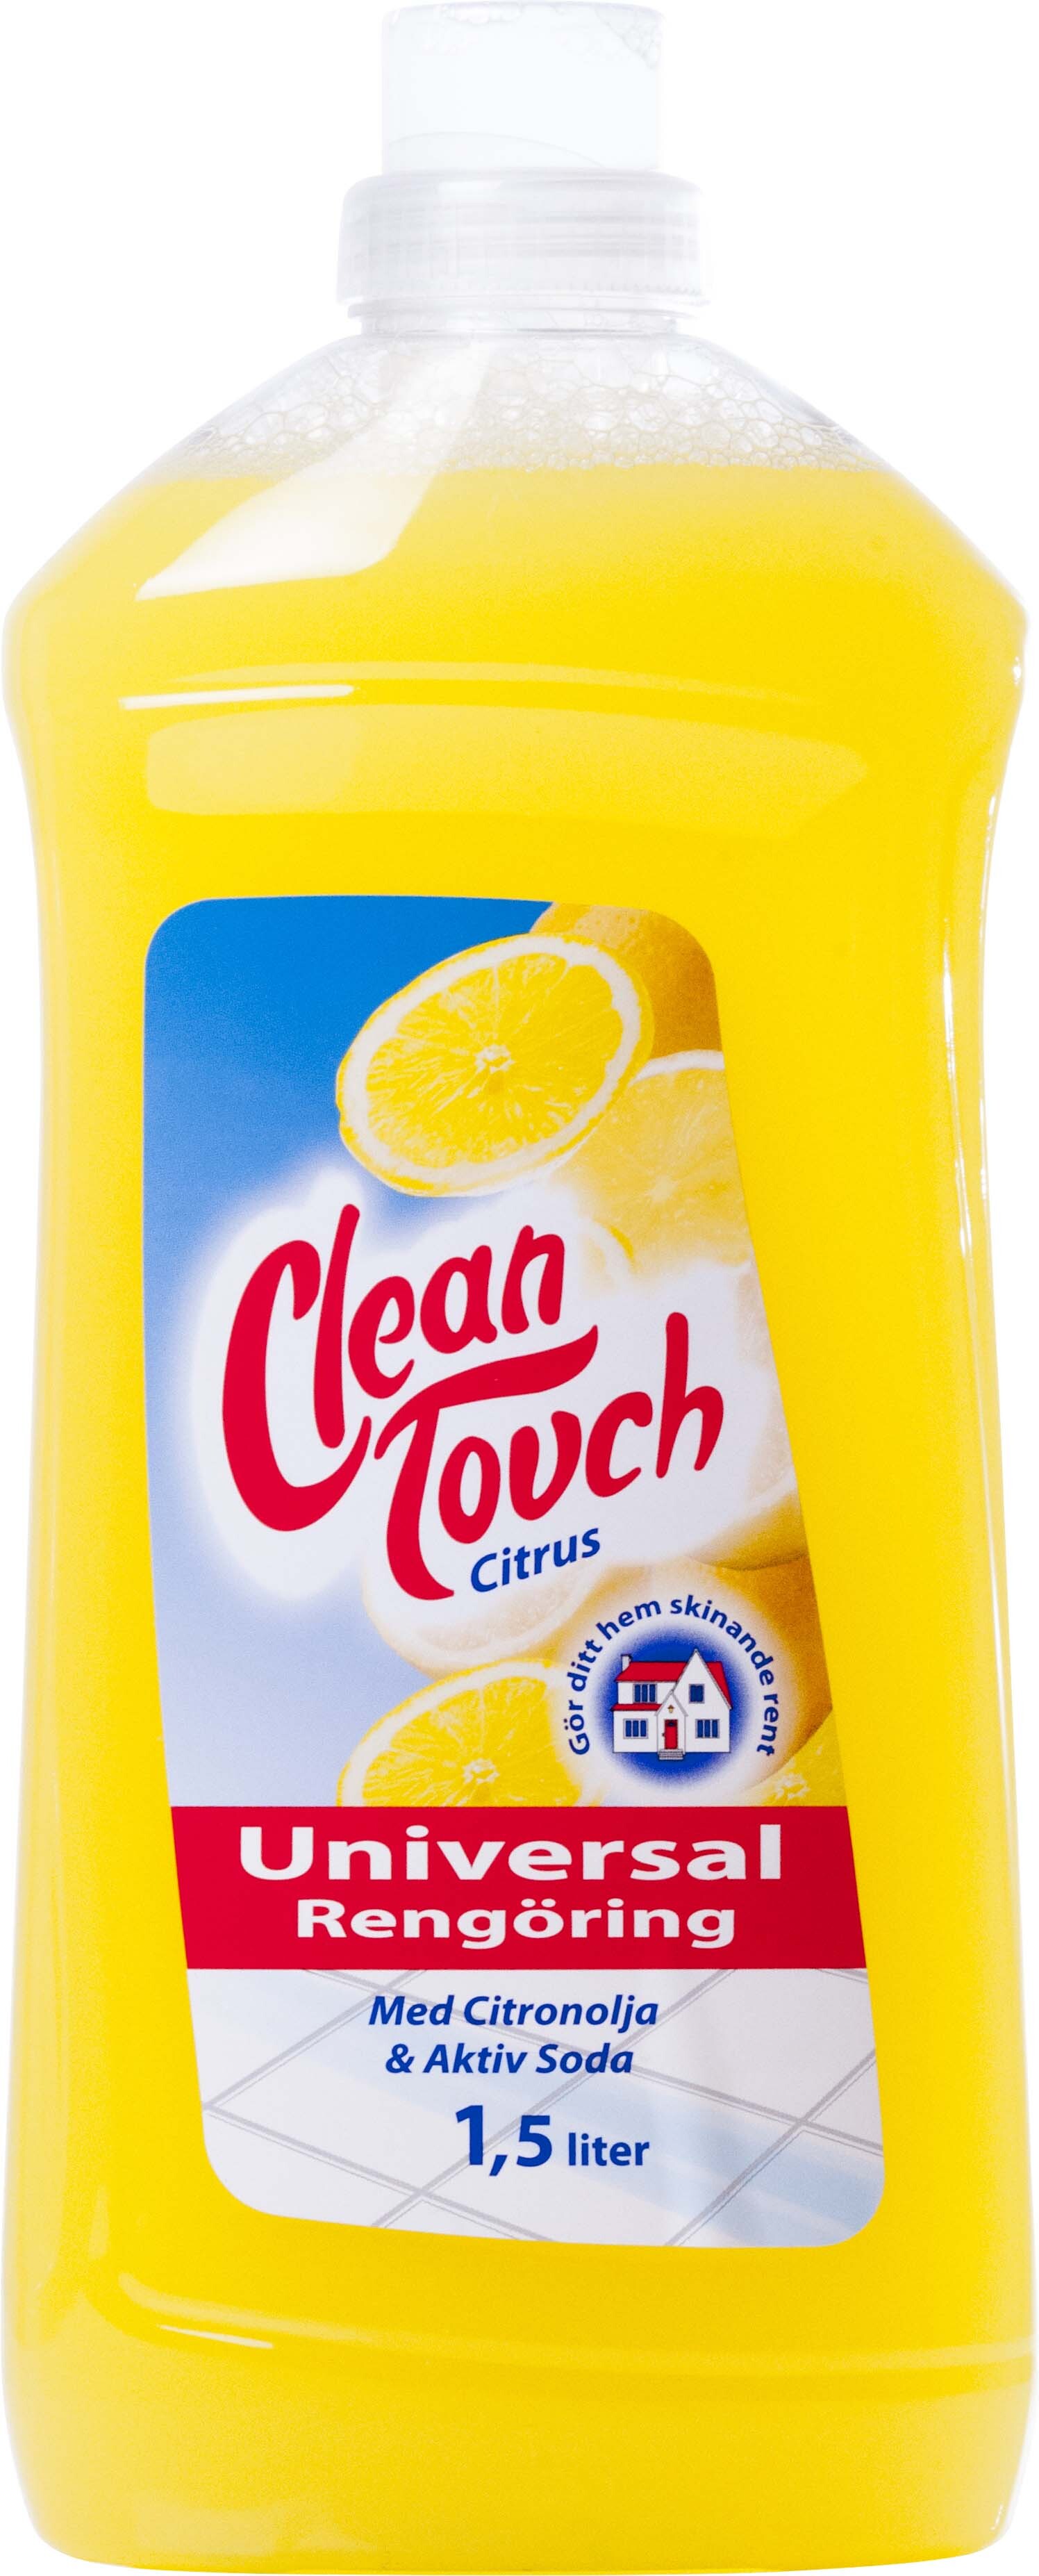 Clean Touch Universal Citrus 1500 ml